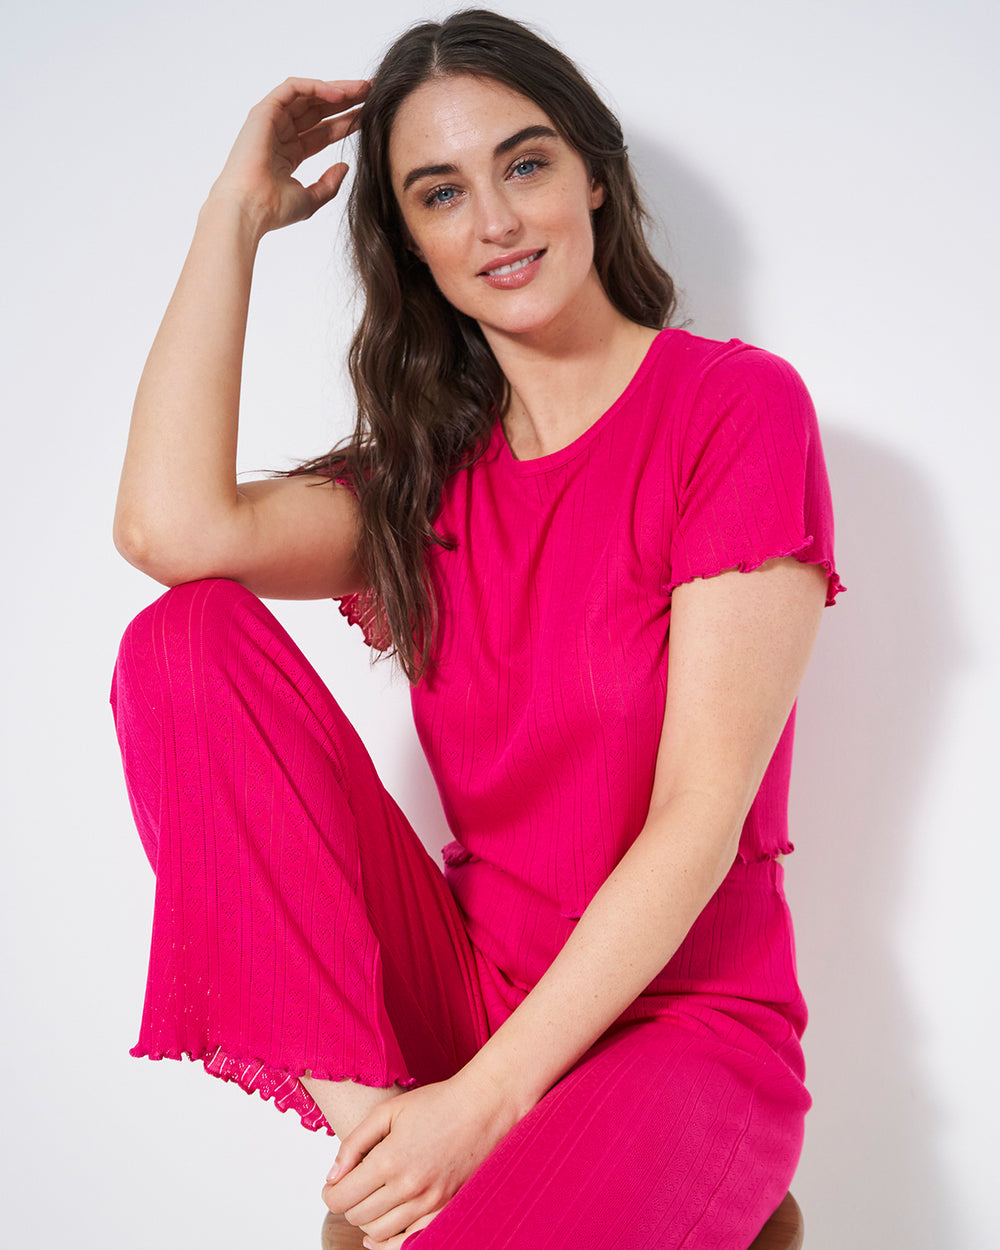 Pointelle Knit Long Pyjama Bottom - Raspberry Stripe & Stare®